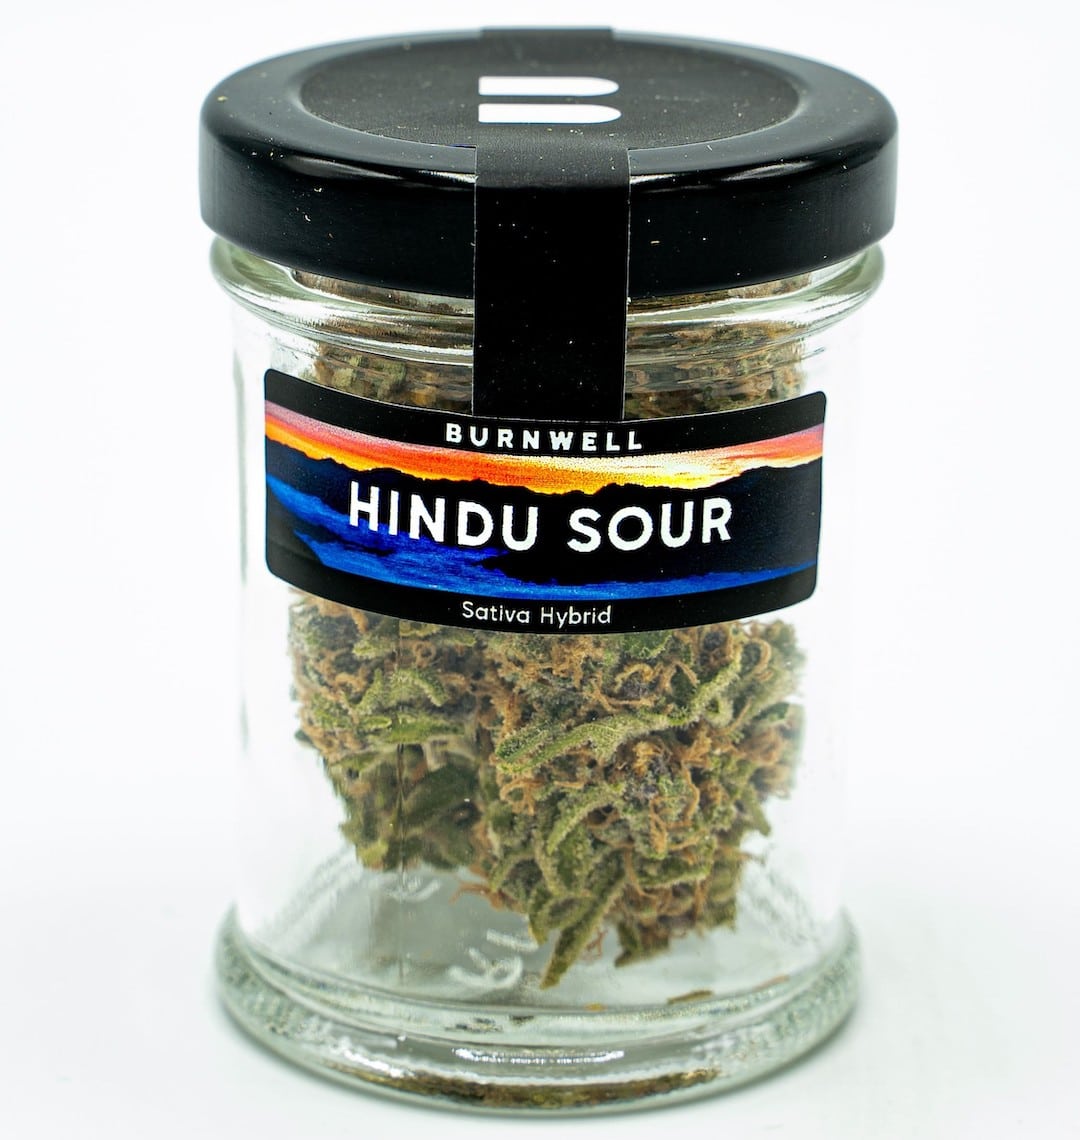 Hindu Sour Cannabis Strain from Burnwell